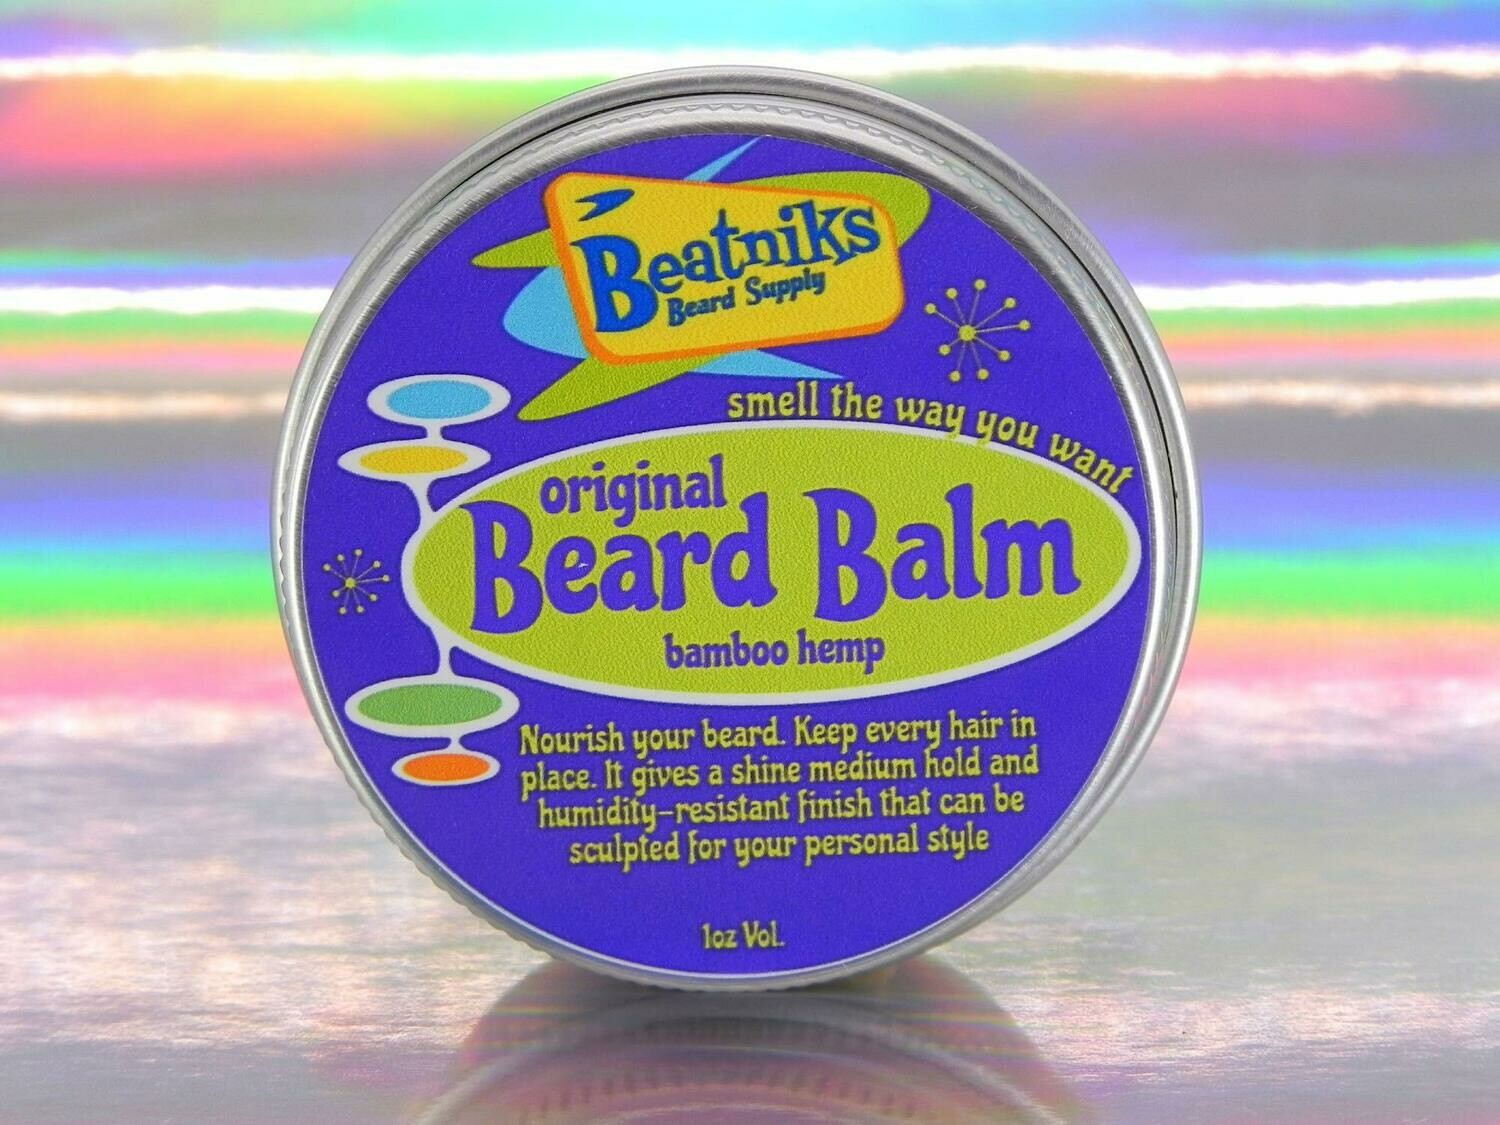 BAMBOO HEMP | Beard Balm Original